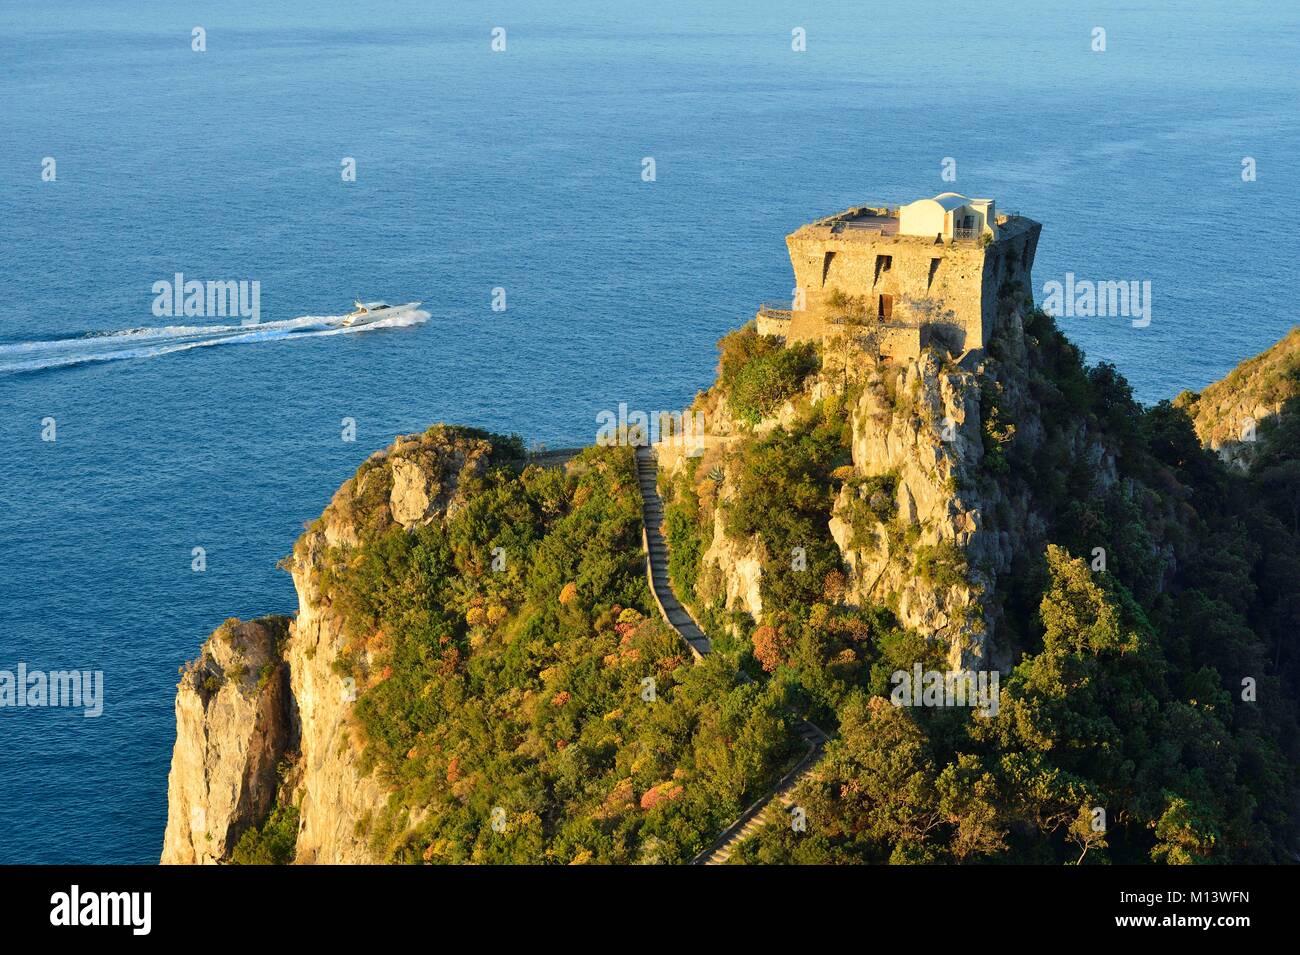 Italy, Campania region, Amalfi Coast listed as a UNESCO World Heritage Site, Conca dei Marini, Capo di Conca Stock Photo